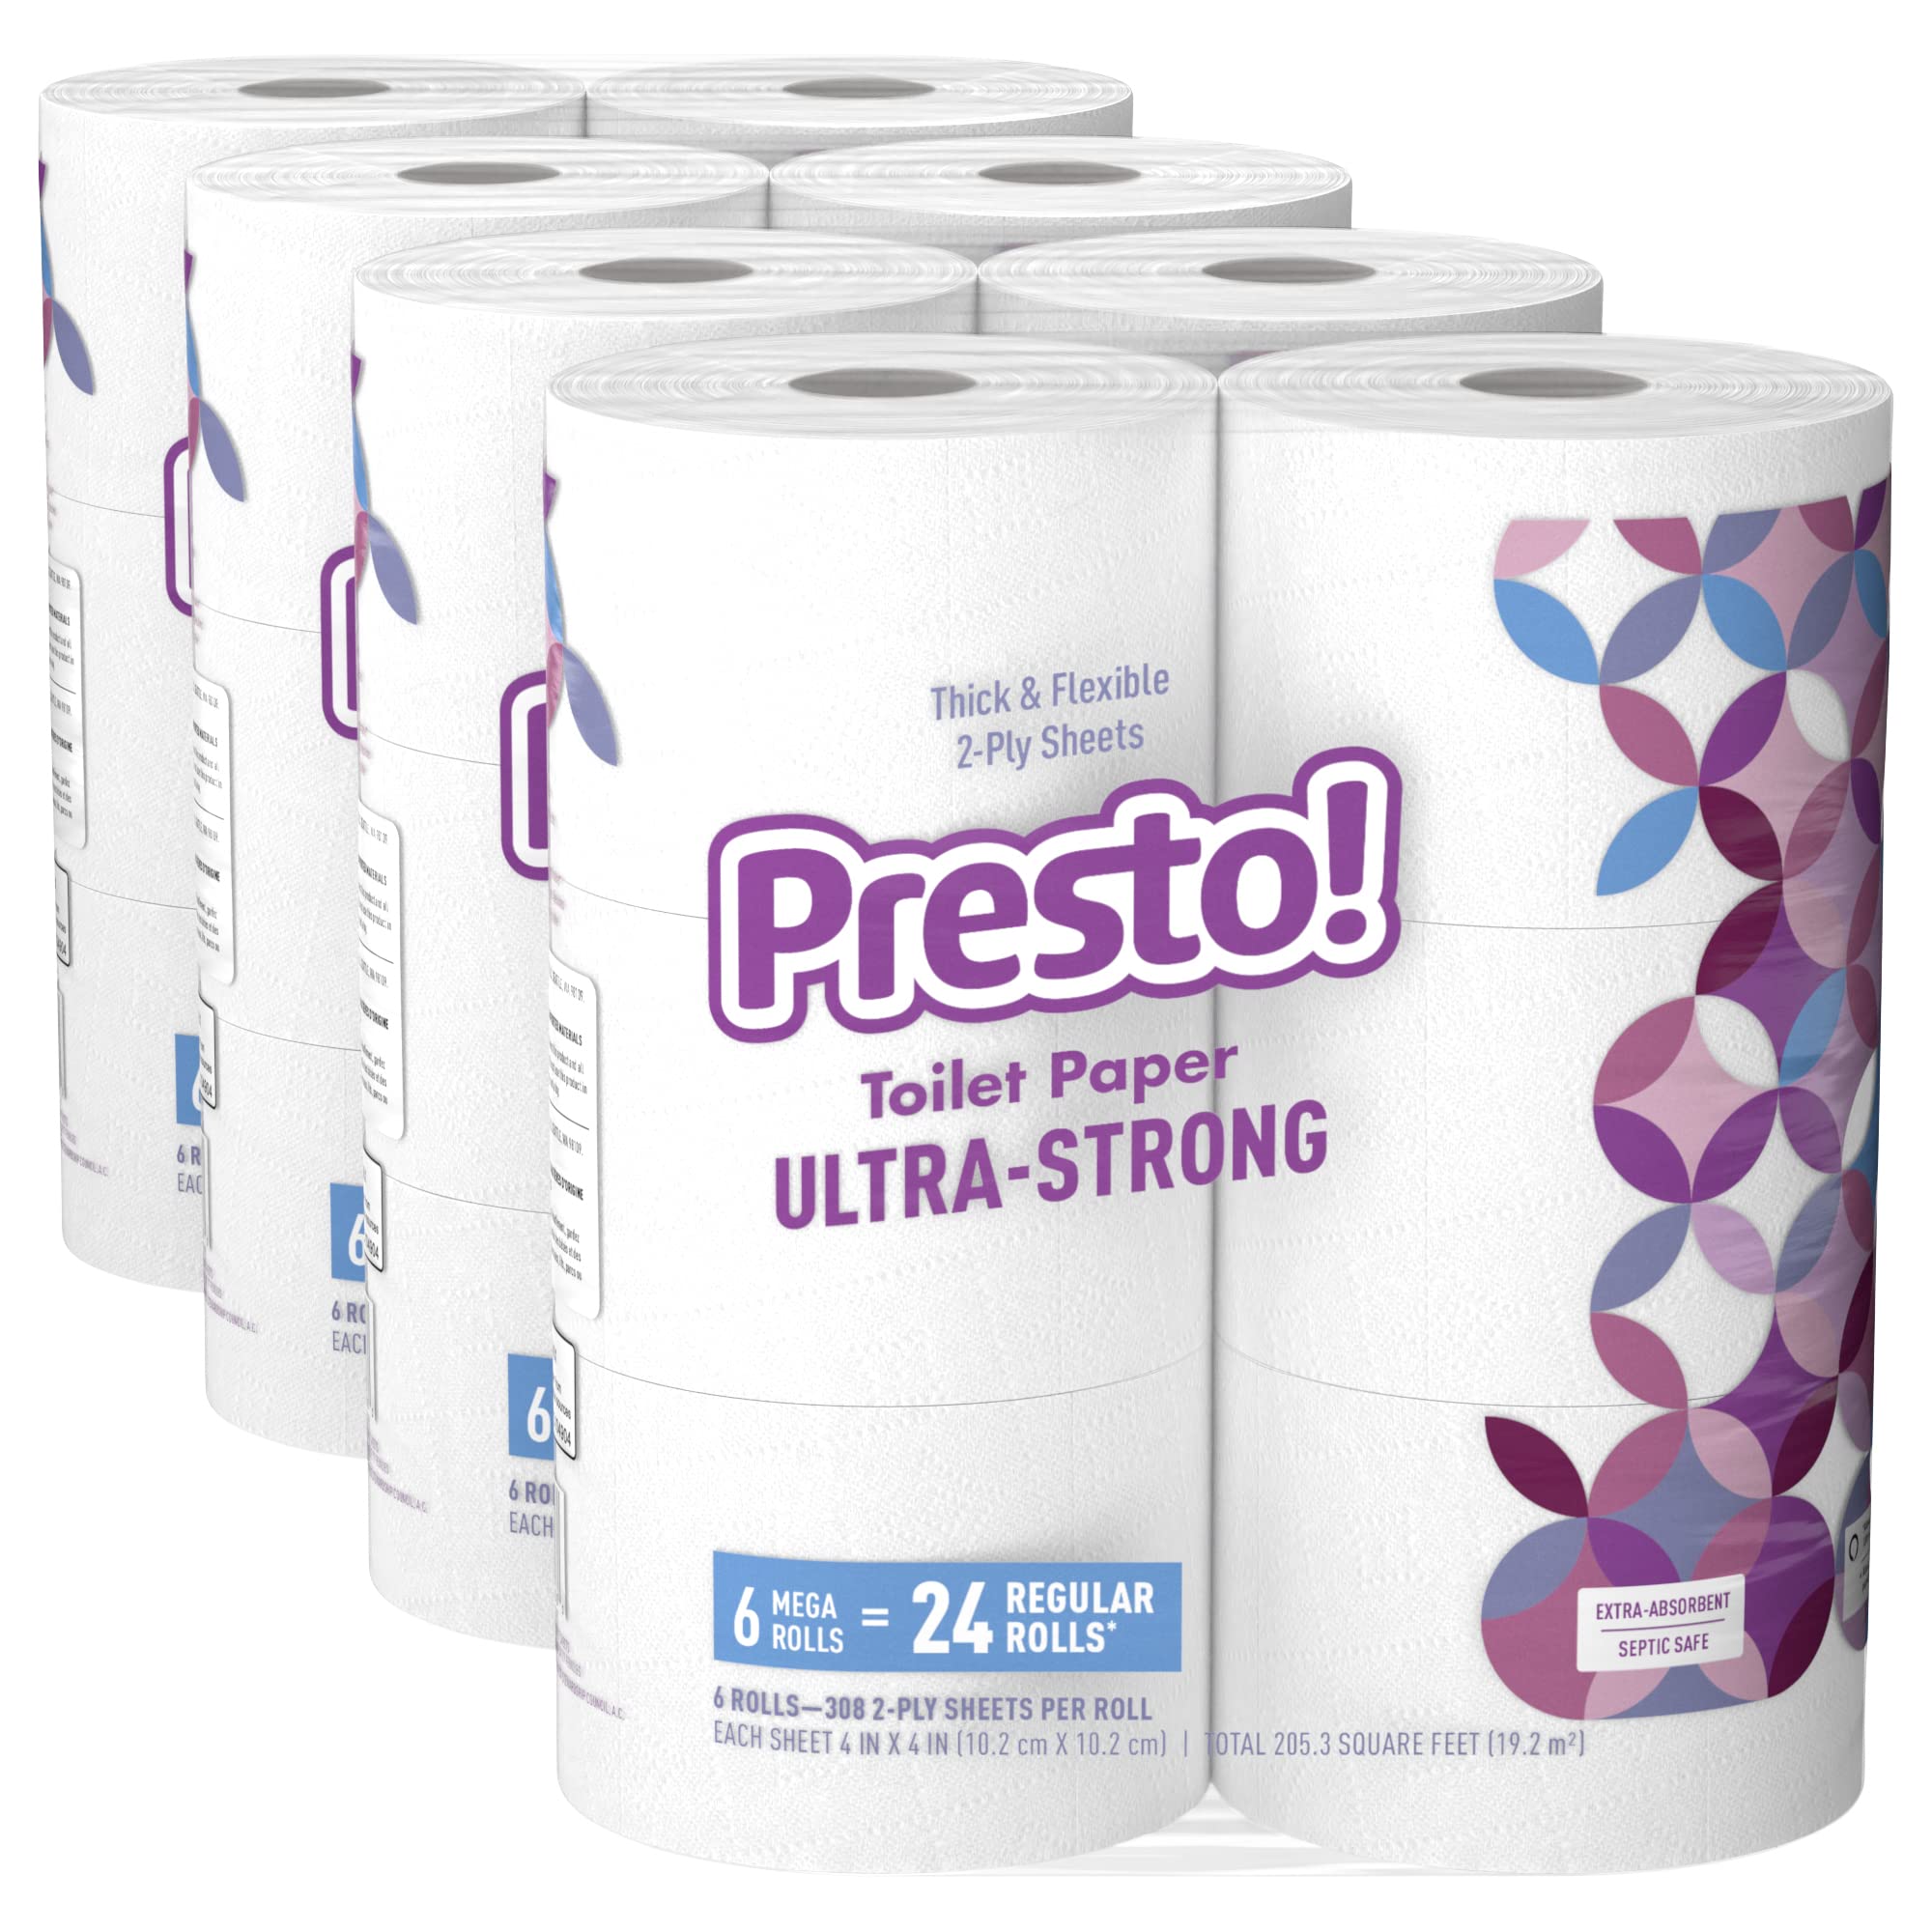 $17.78 /w S&S: Amazon Brand - Presto! 308-Sheet Mega Roll 2-Ply Toilet Paper, Ultra-Strong, 24 Rolls